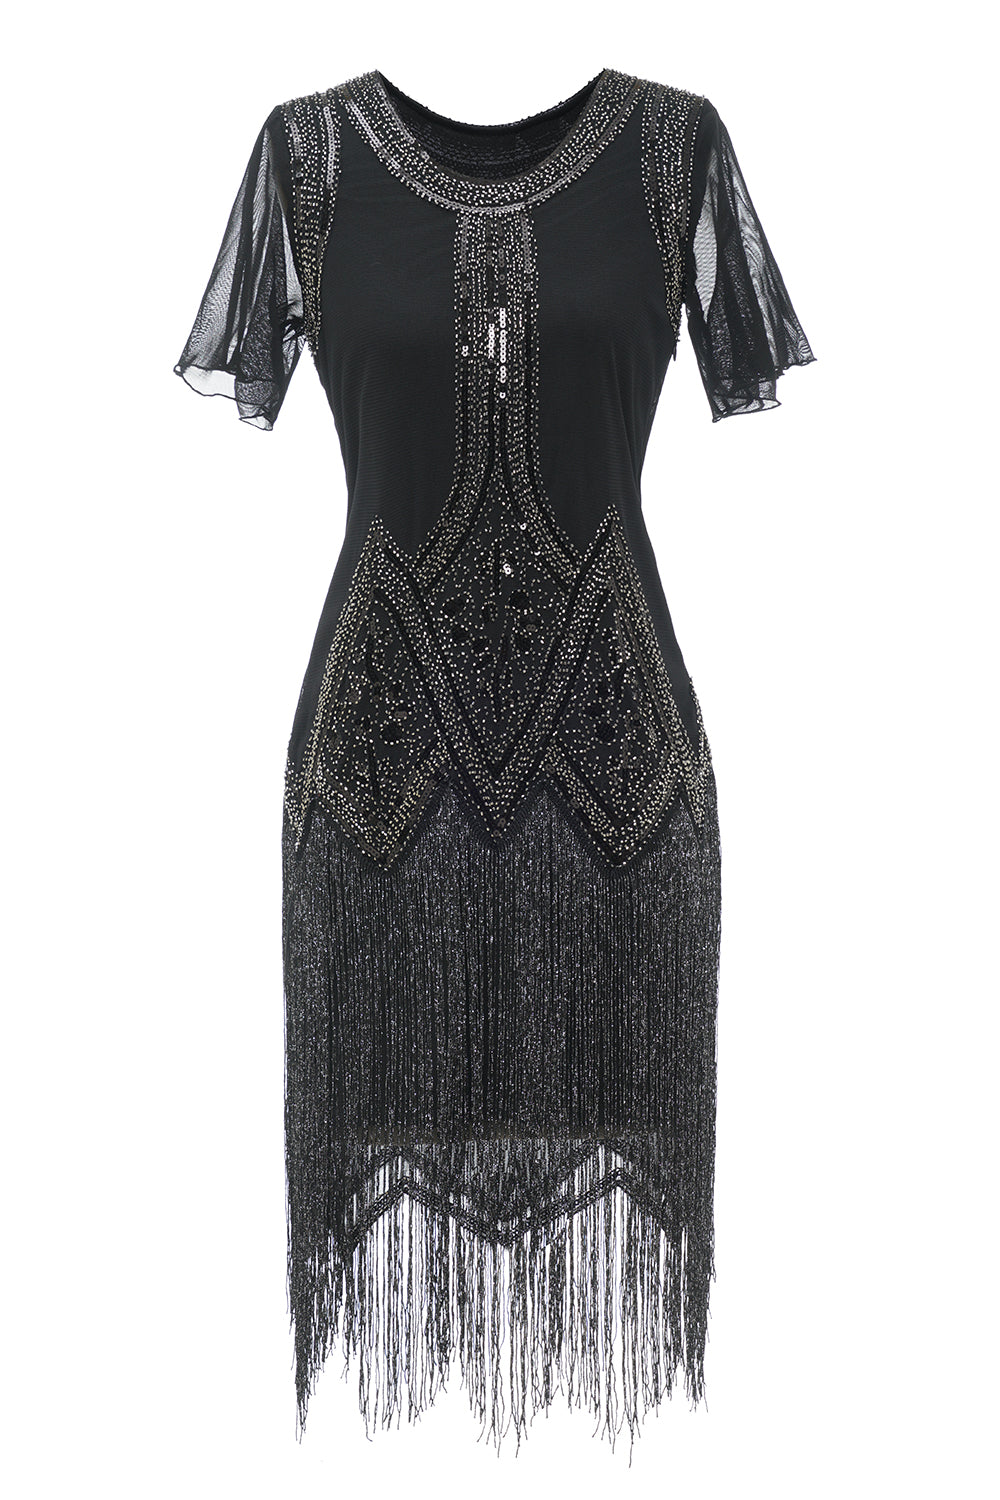 Luxurious Sequined Beaded Fringe 1920s Dress